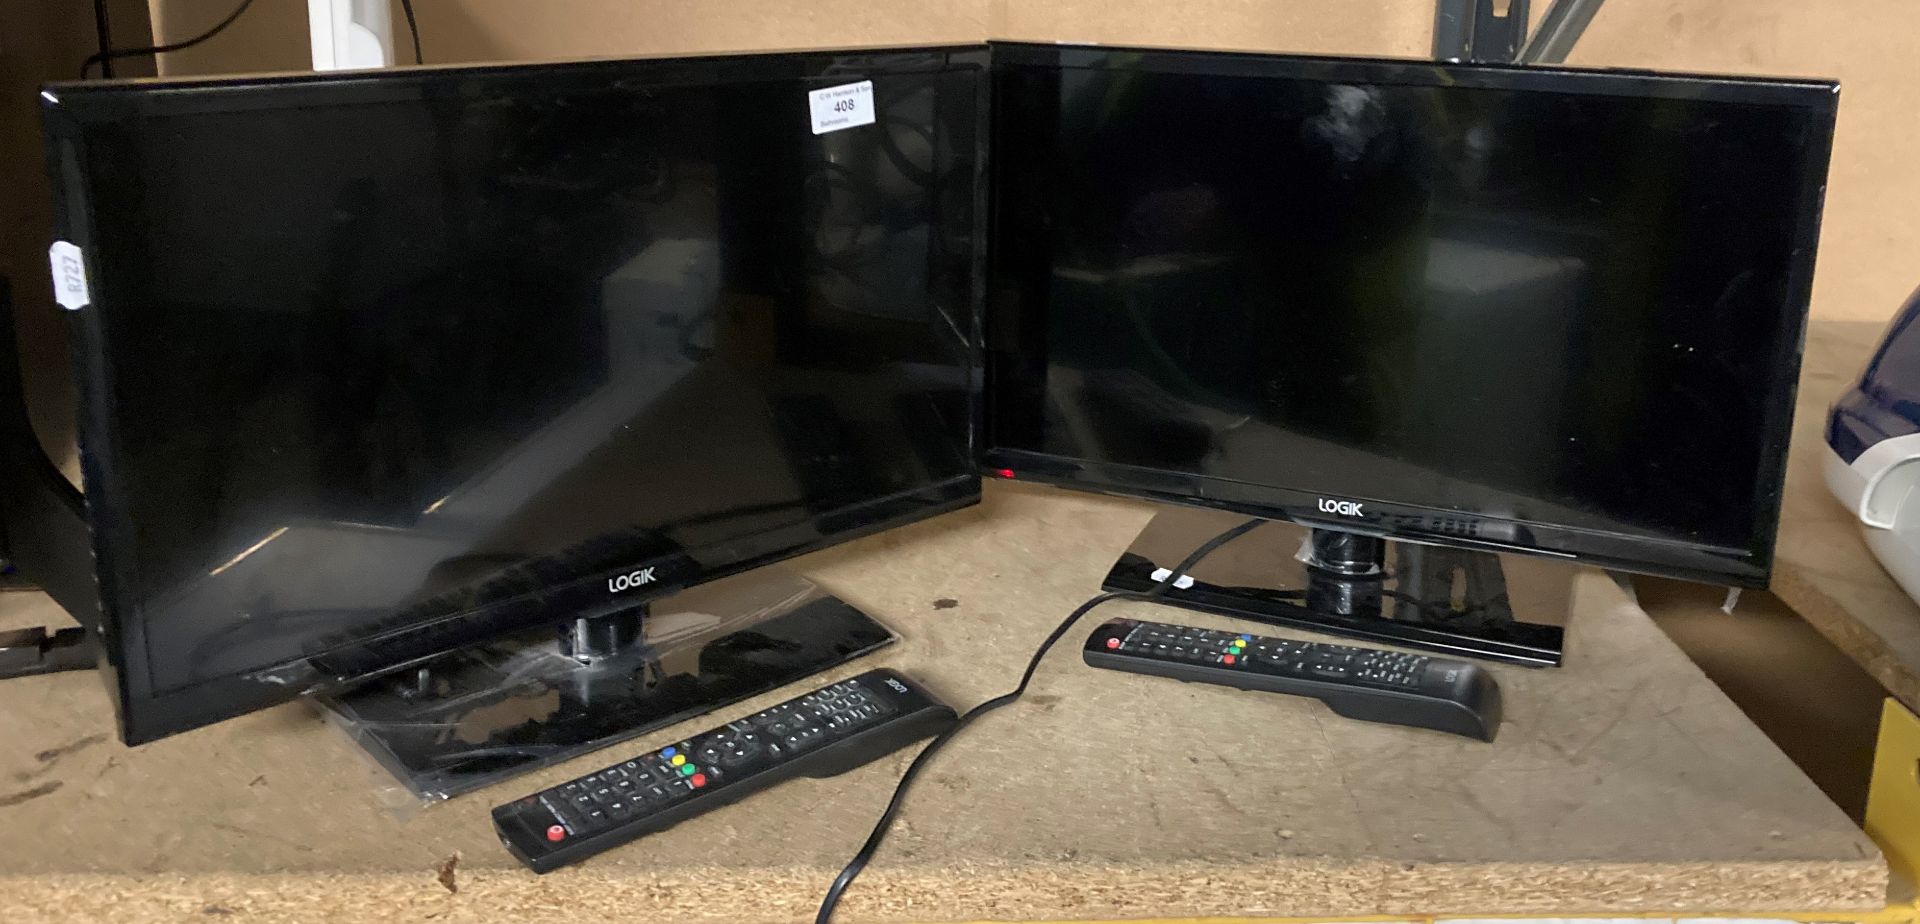 2 x Logik 20" LED HD TVs both with remotes (saleroom location: PO) - Image 2 of 2